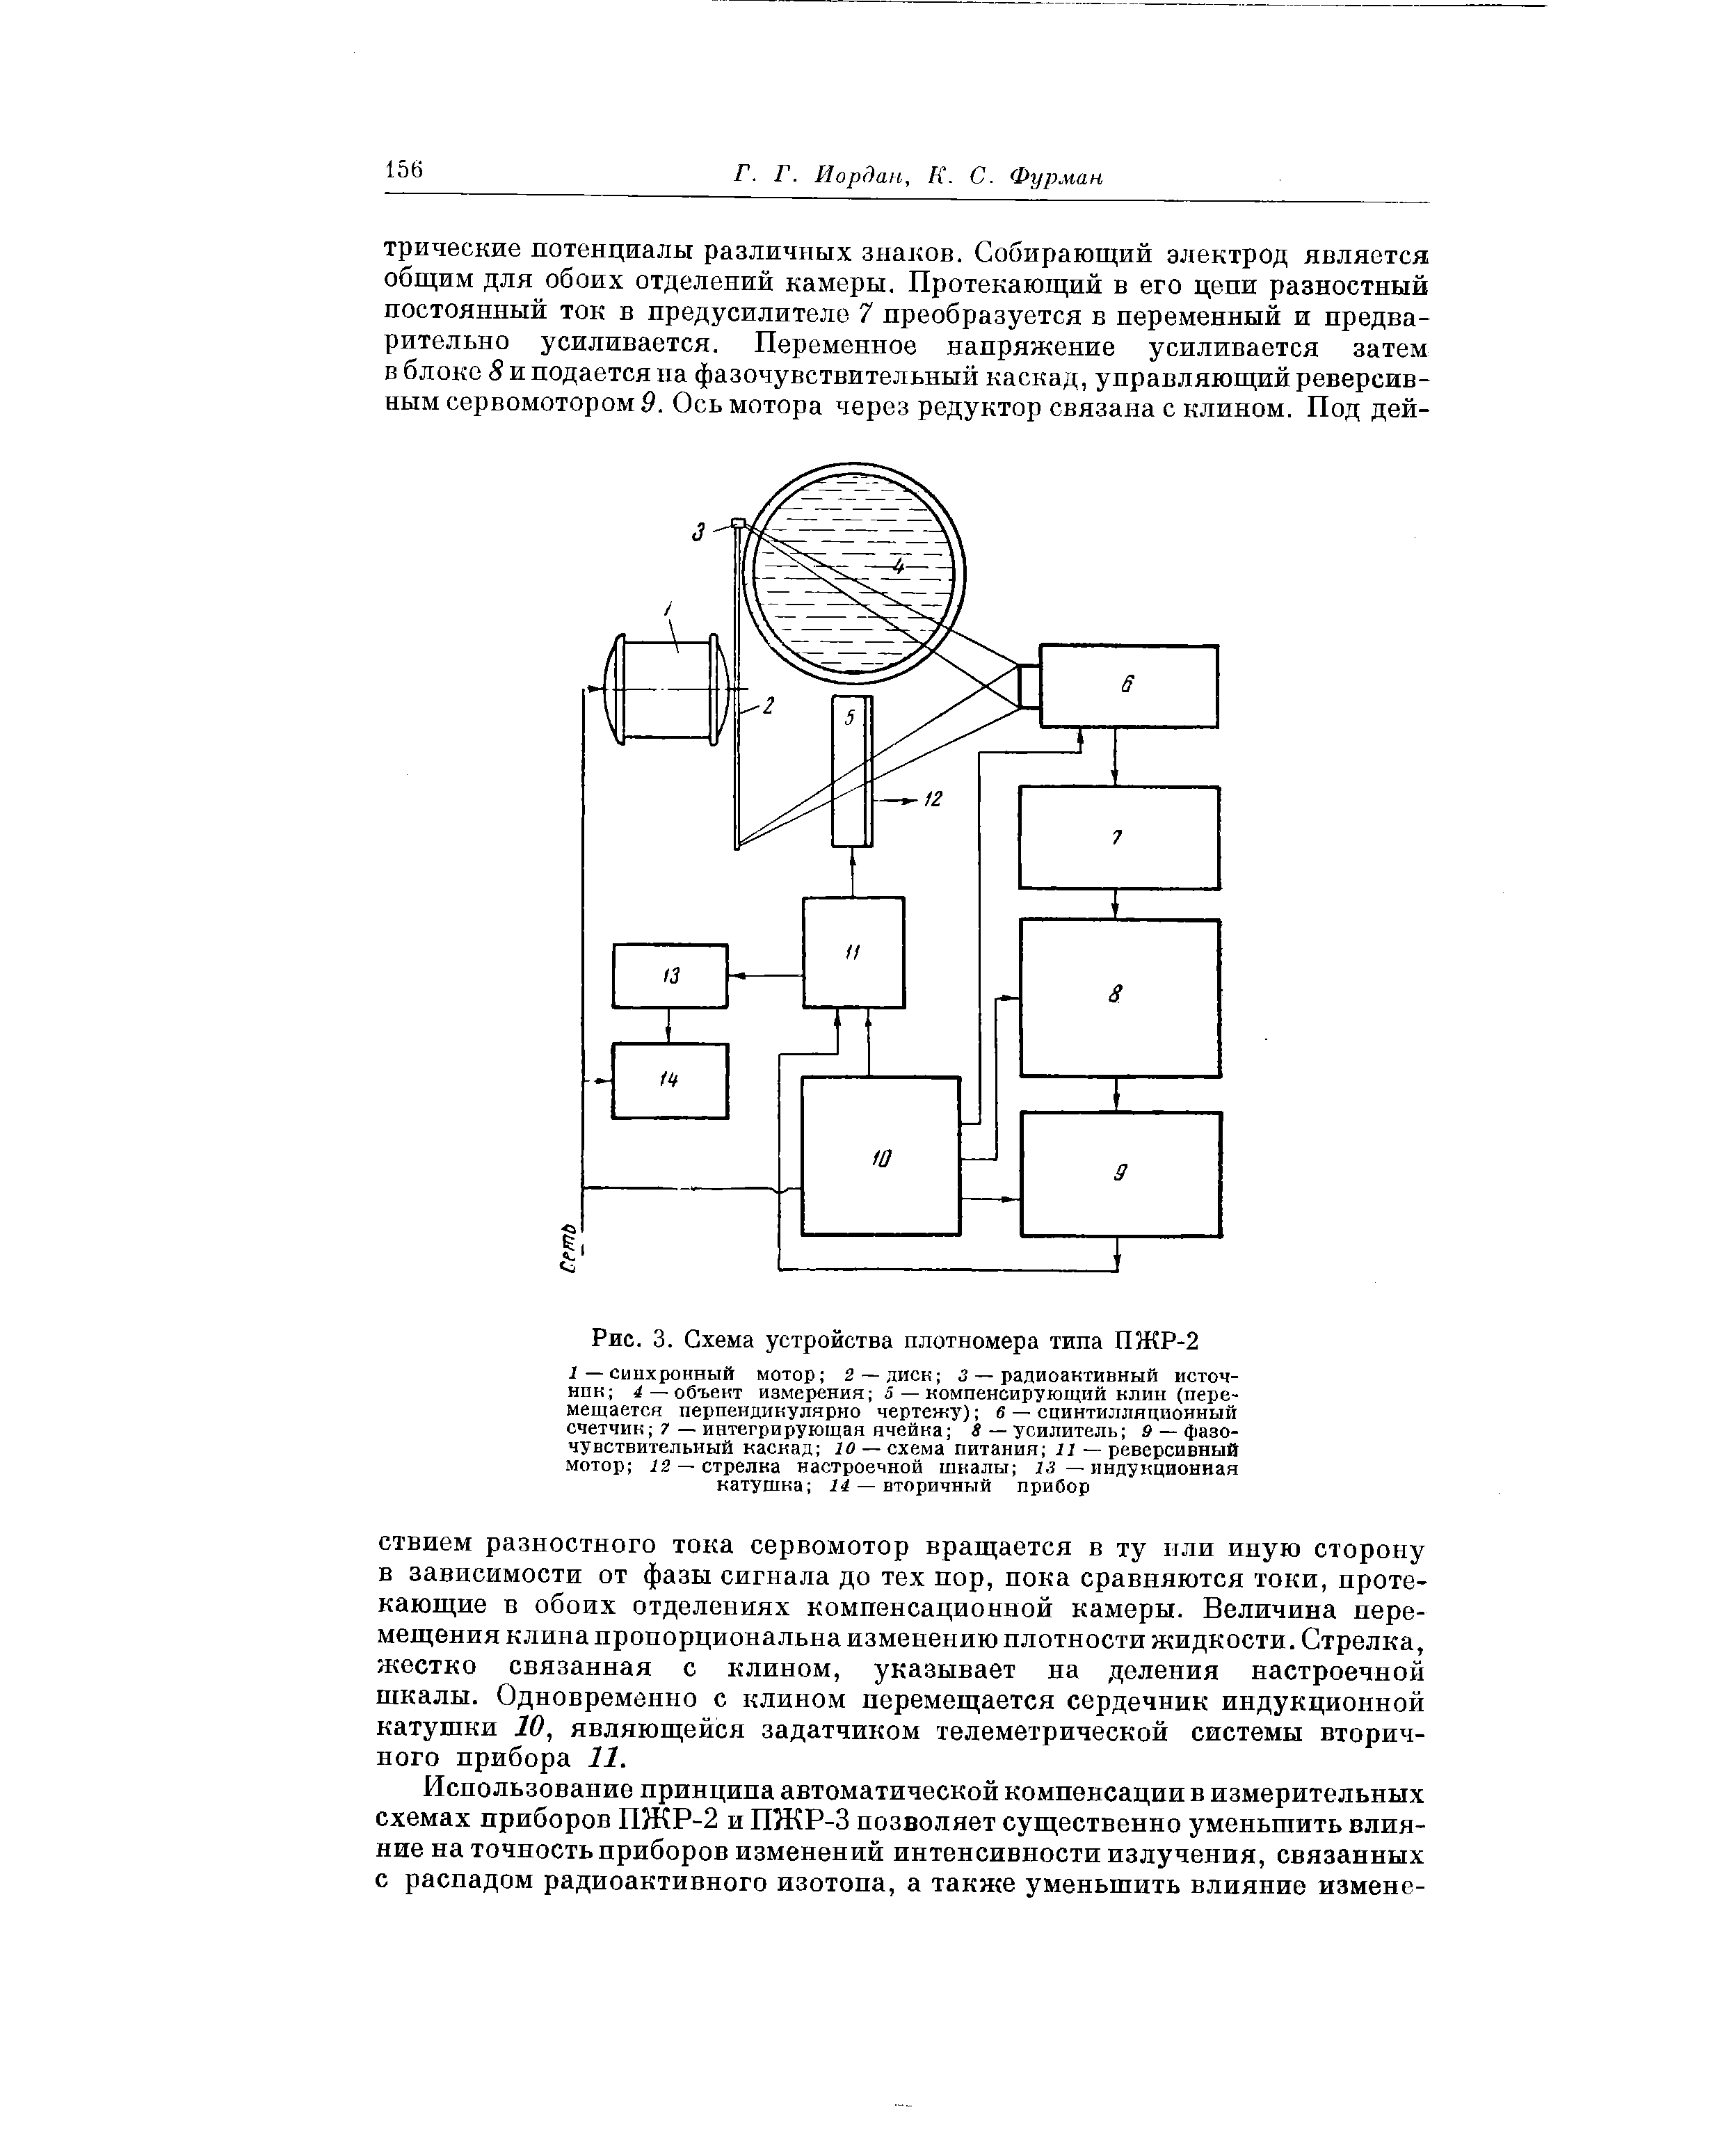 Рис. 3. Схема устройства плотномера типа ПЖР-2
